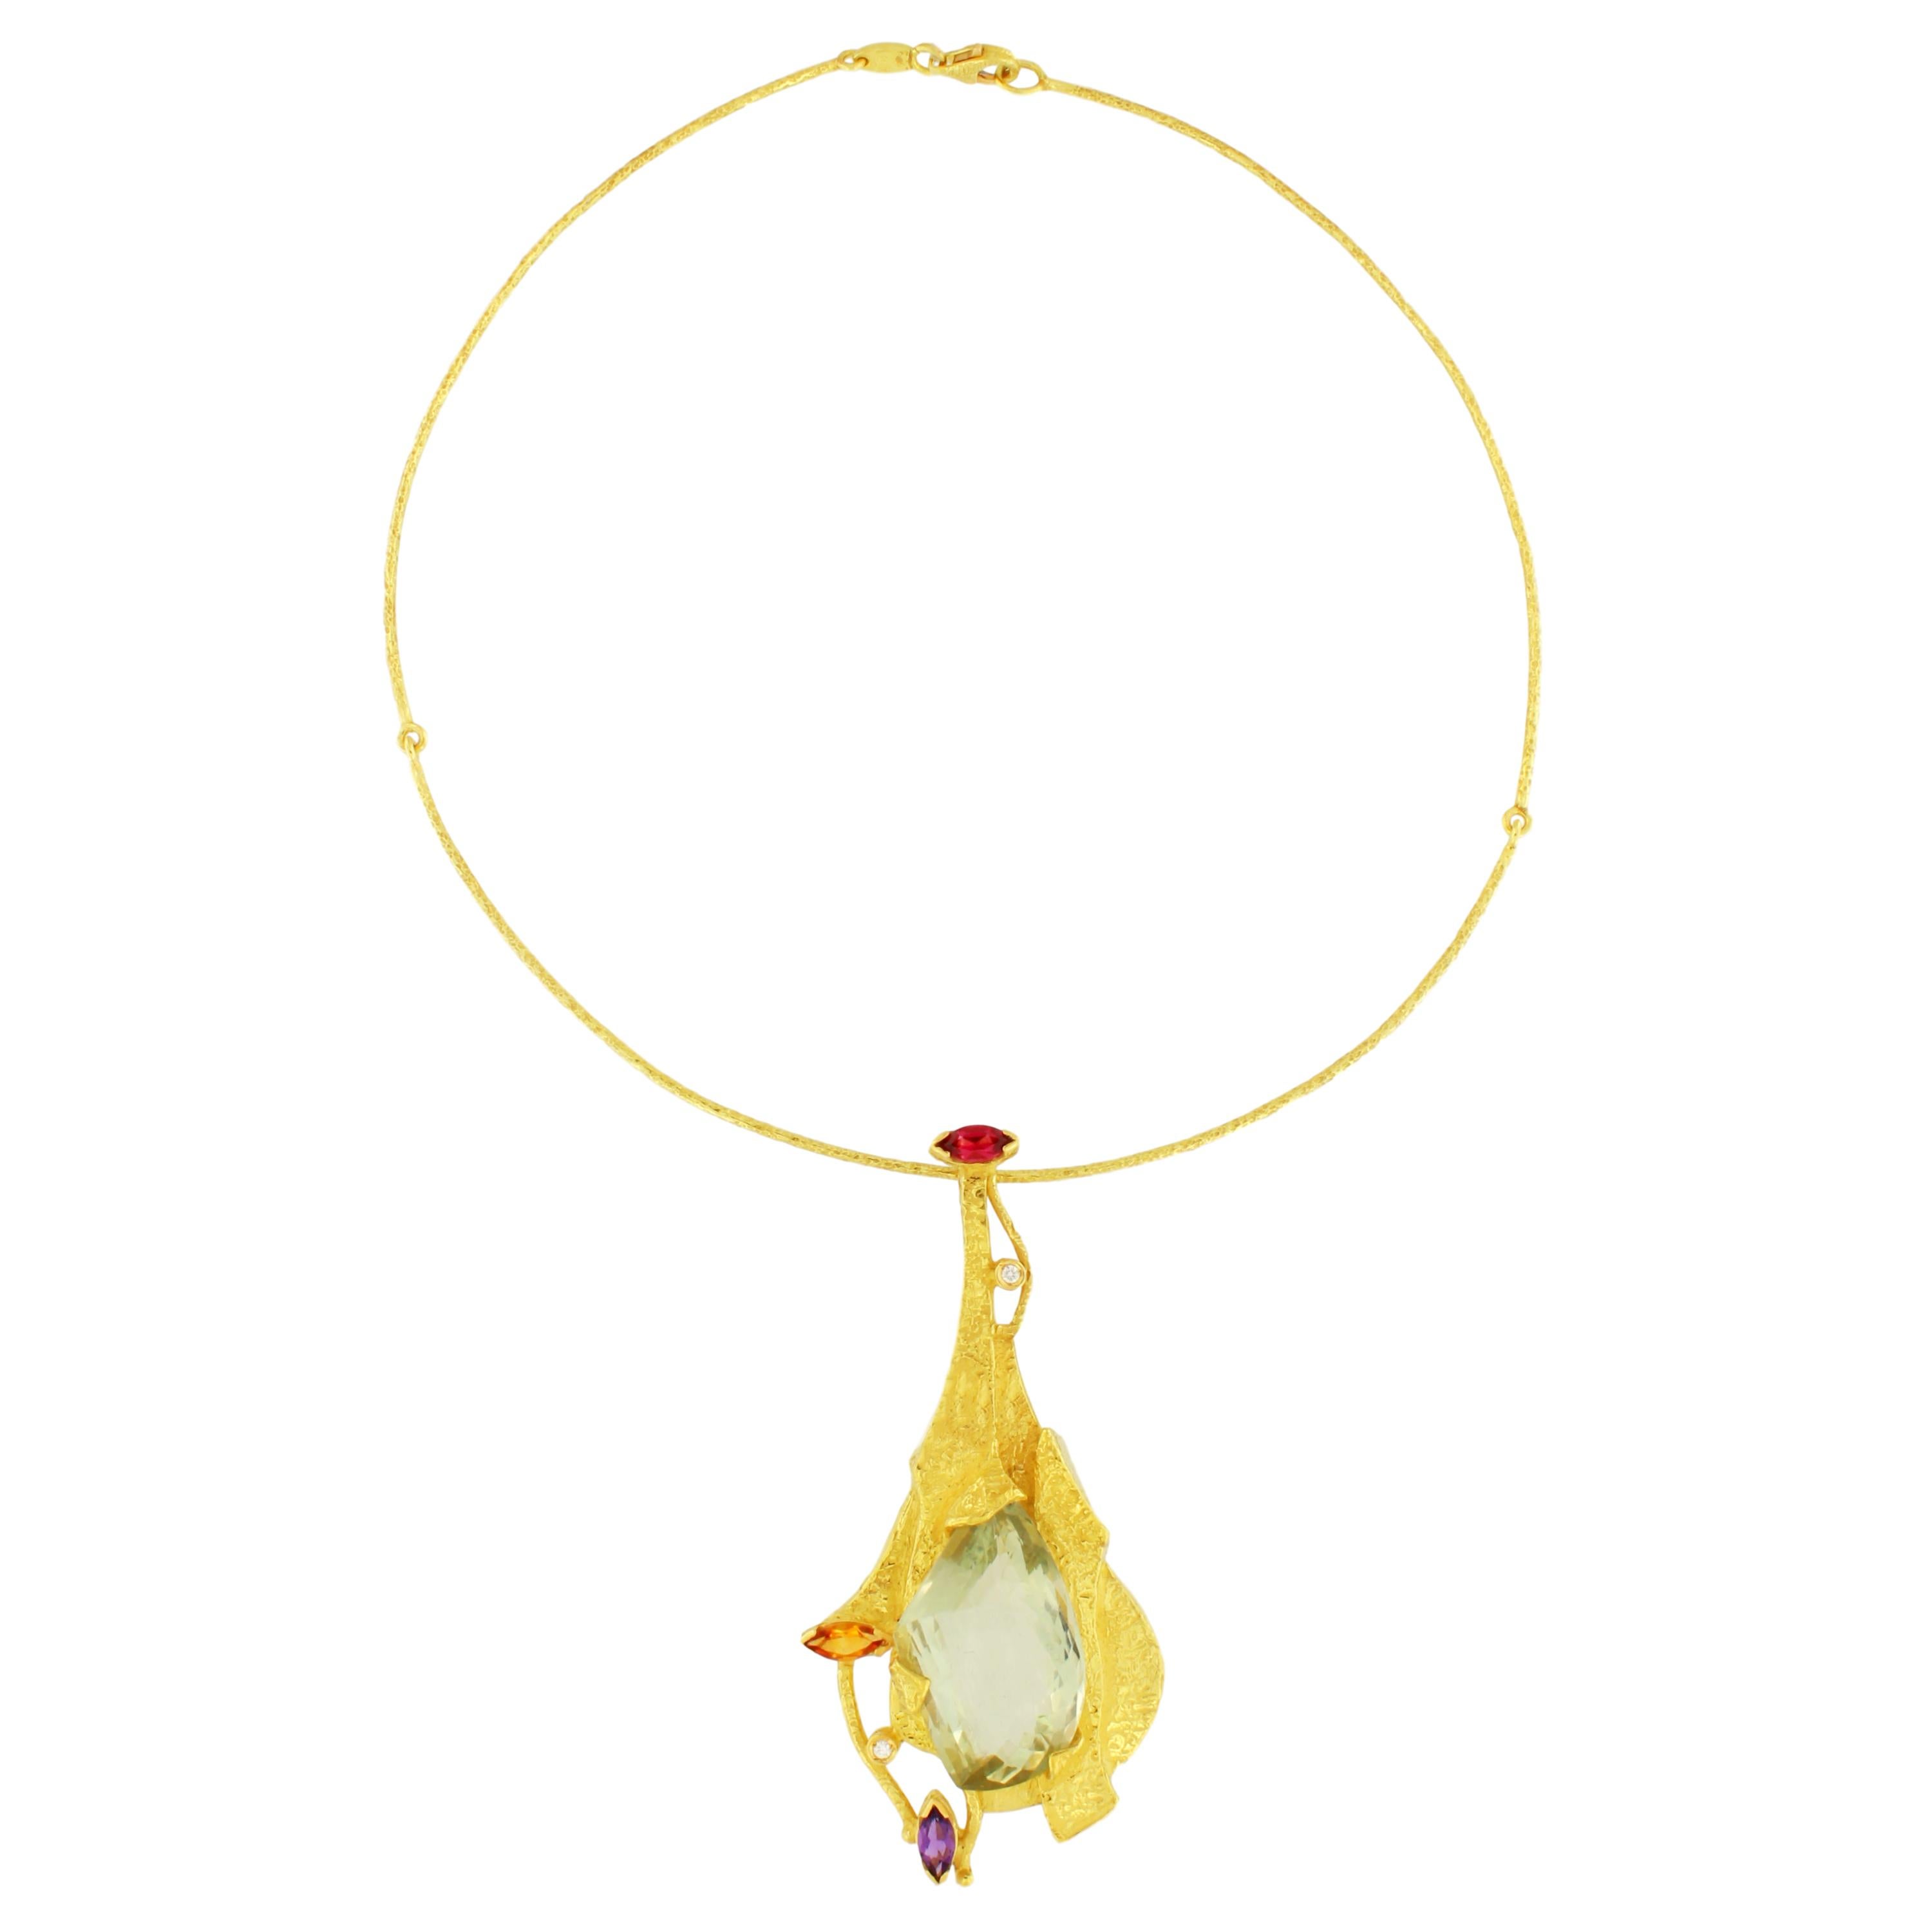 Contemporain Collier en or jaune 18 carats avec pierres précieuses multicolores 